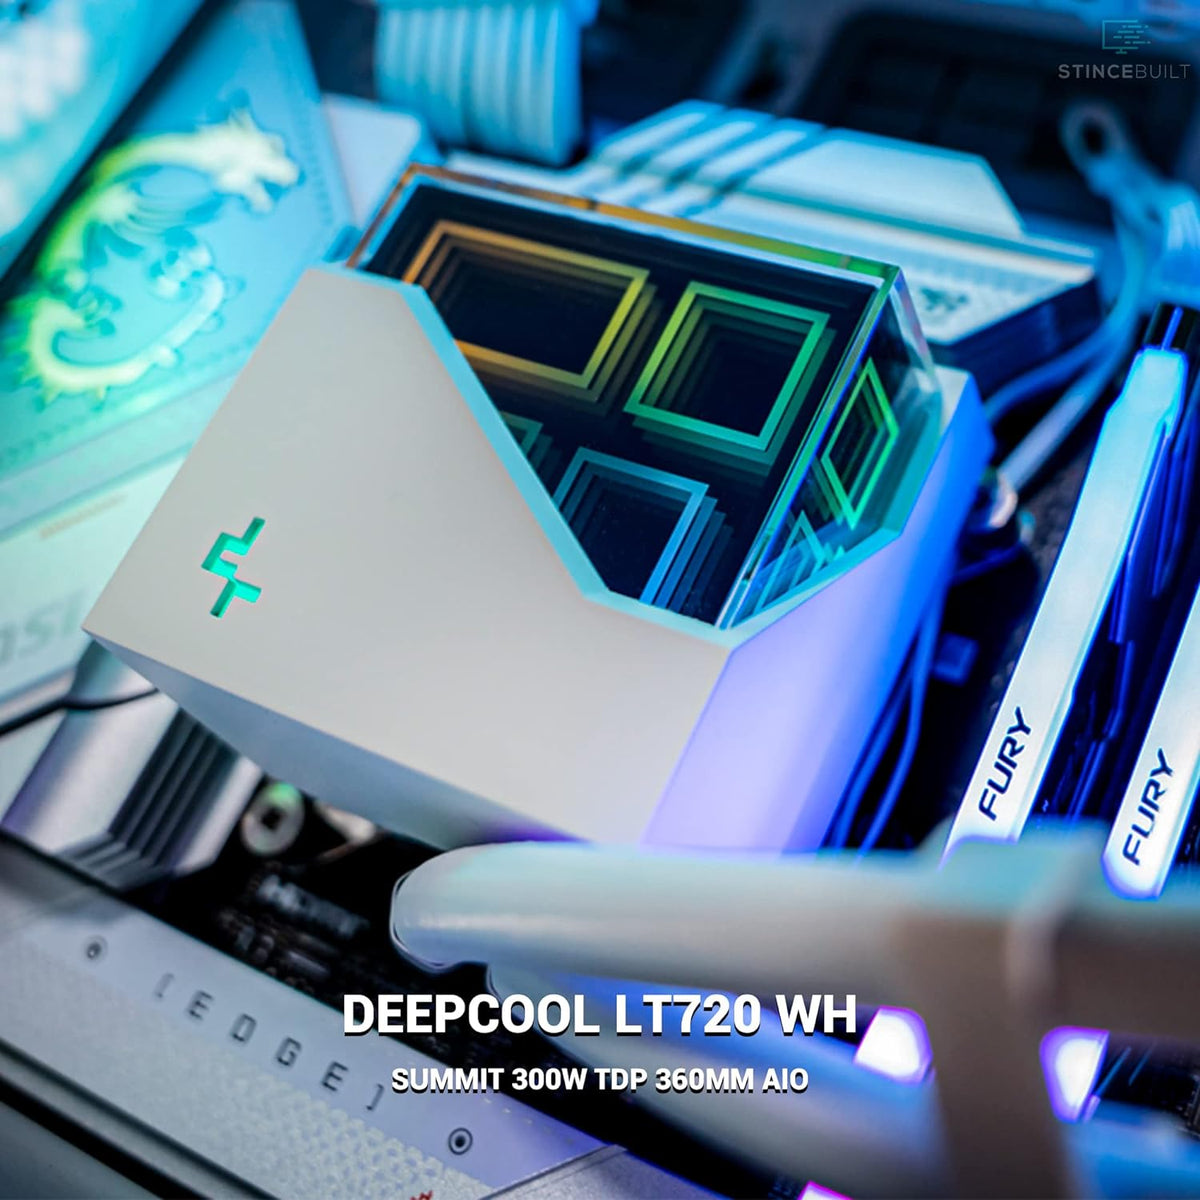 Deepcool LT720 Infinity Mirror 360mm AIO White